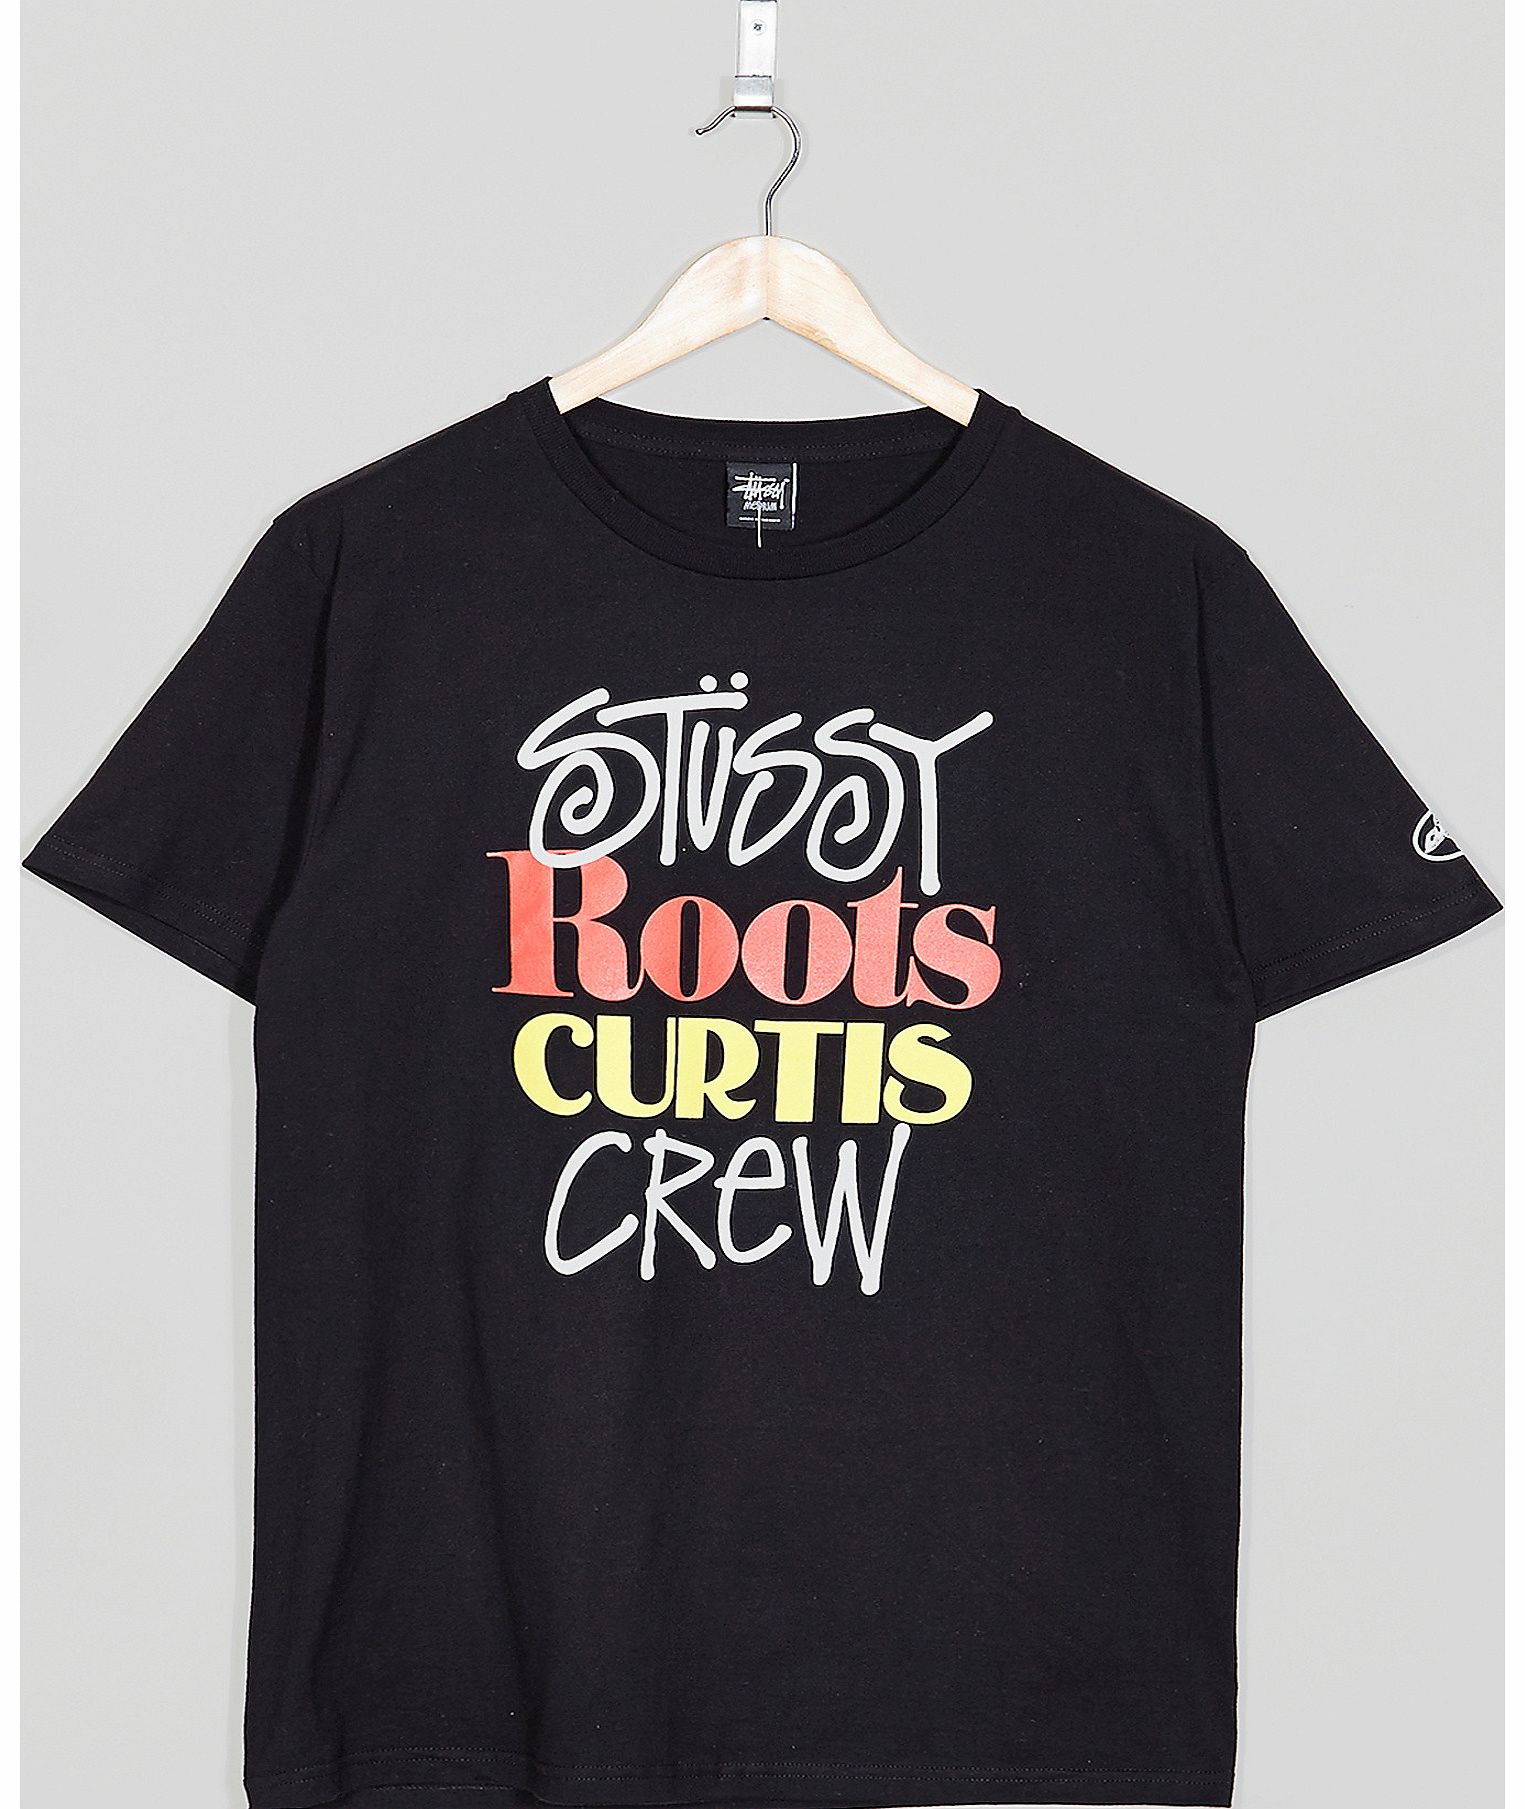 Curtis Crew T-Shirt